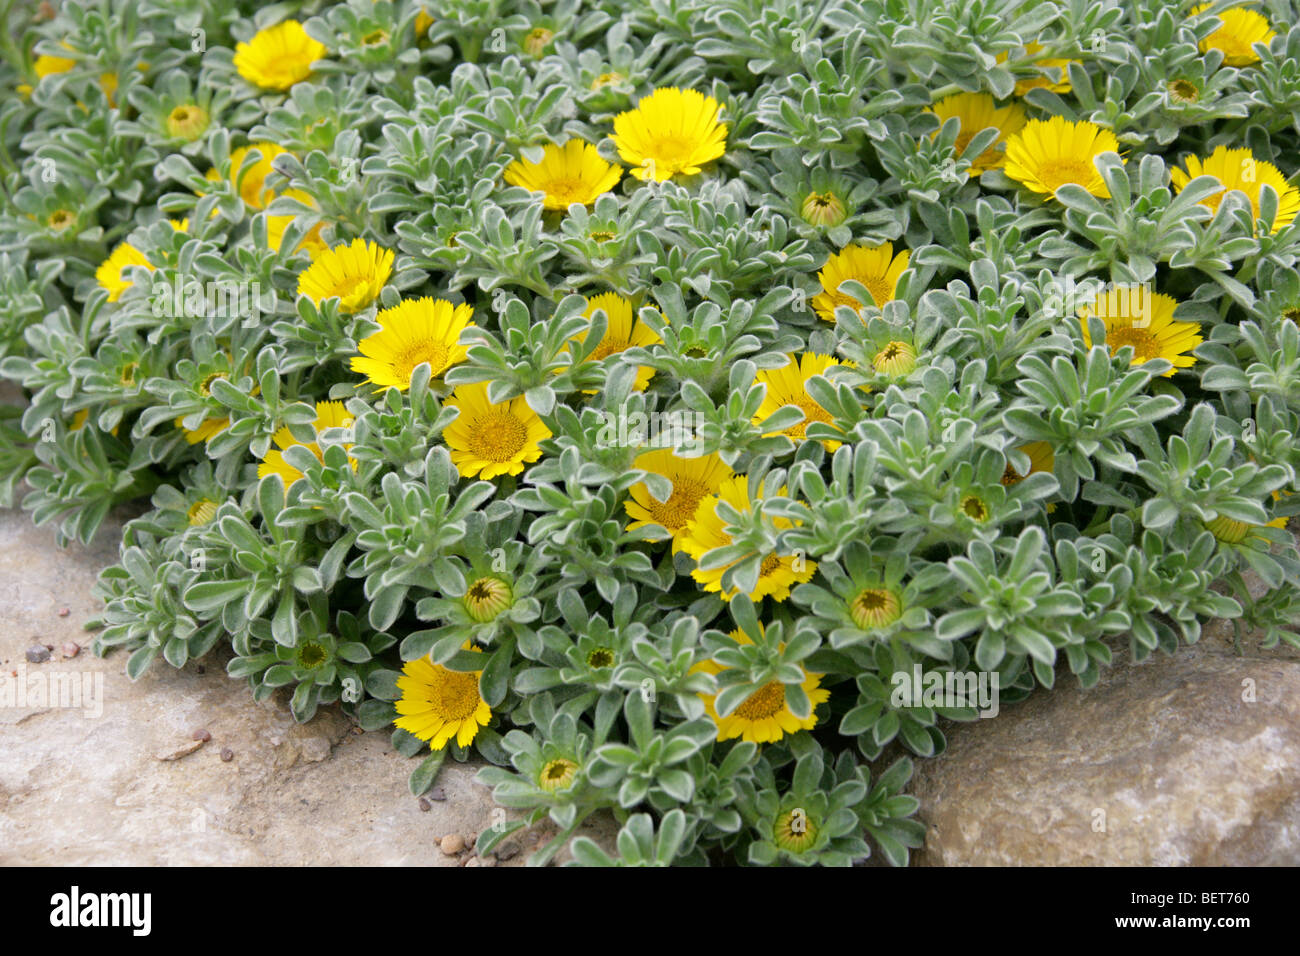 Alfombras tunecinas, moneda de oro playa mediterránea o Daisy, Asteriscus maritimus (Bubonium maritimum), Asteraceae, Túnez, África. Foto de stock